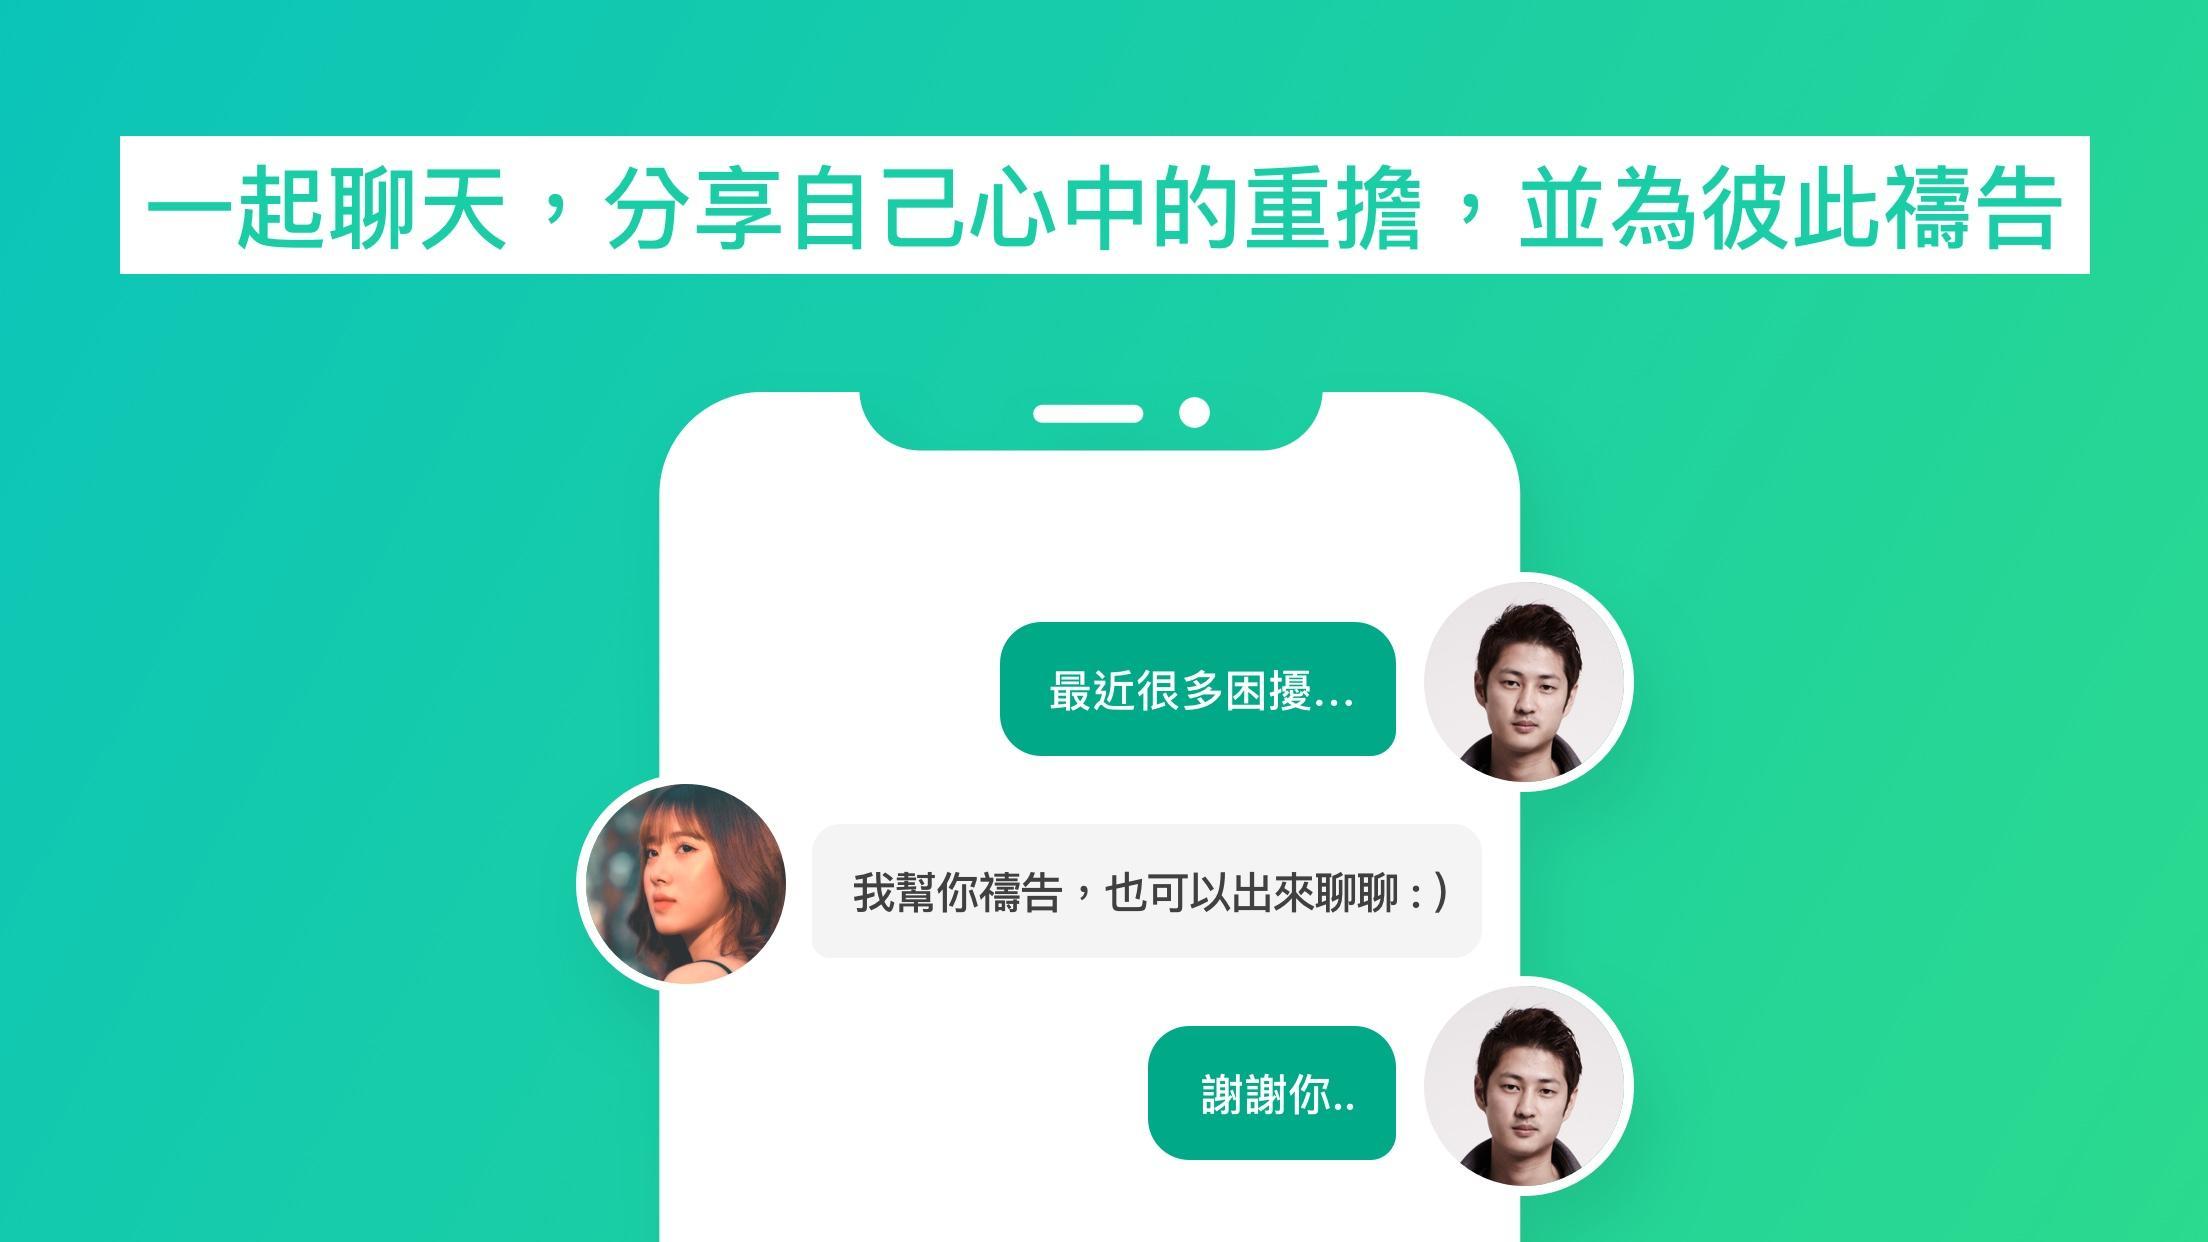 FLOC - a dating app designed for Christian 1.0.6 Screenshot 3